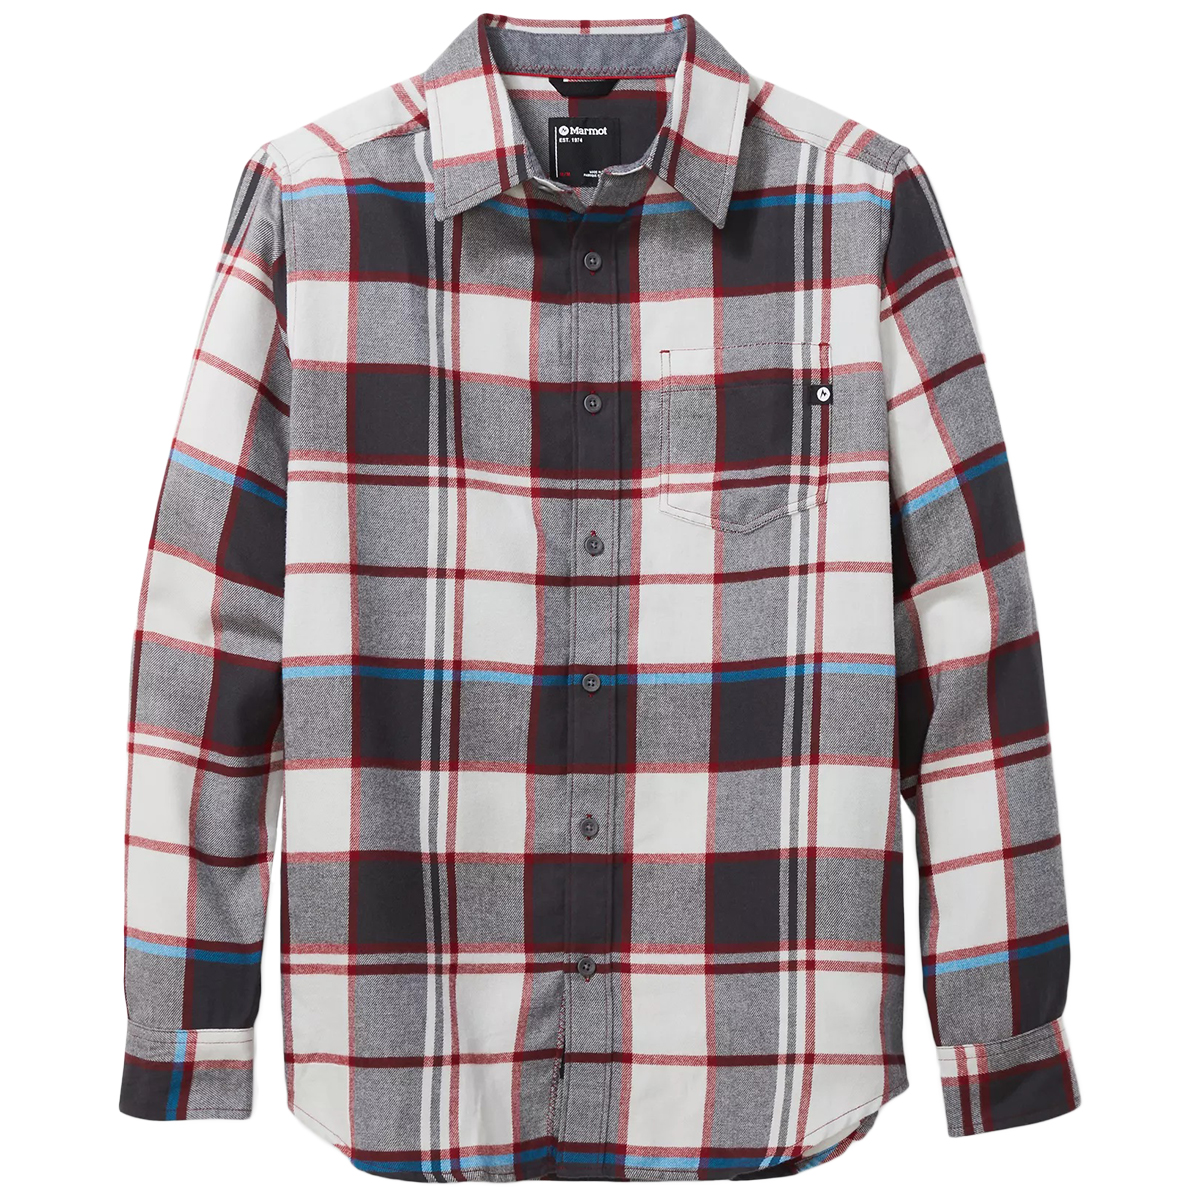 Marmot Men's Fairfax Flannel Long-Sleeve Shirt